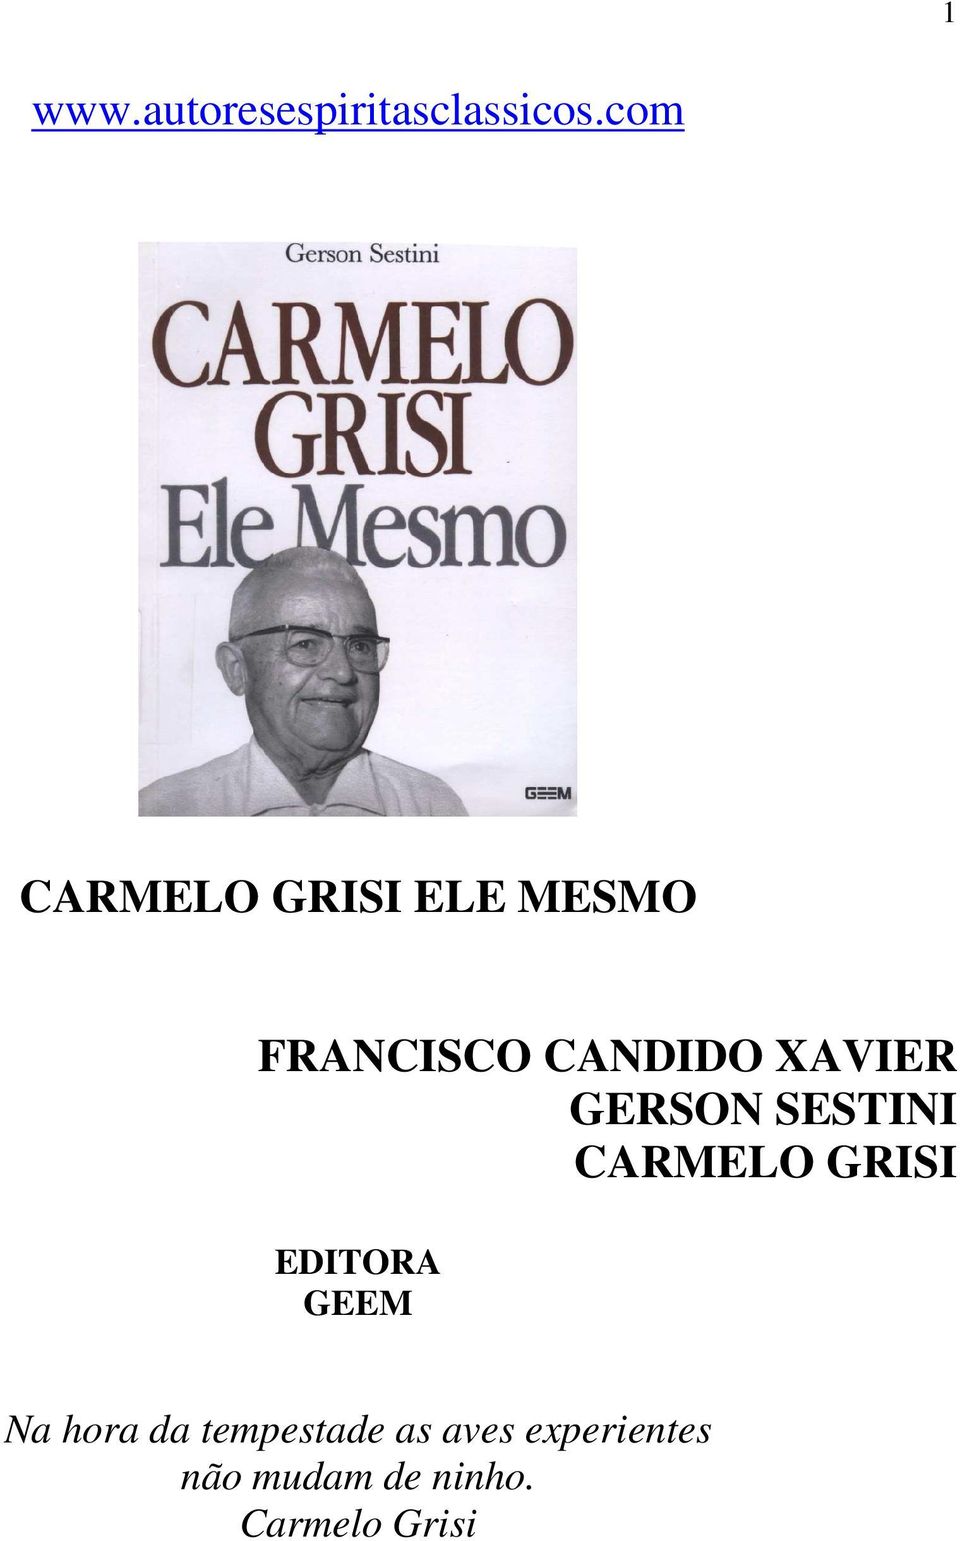 XAVIER GERSON SESTINI CARMELO GRISI EDITORA GEEM